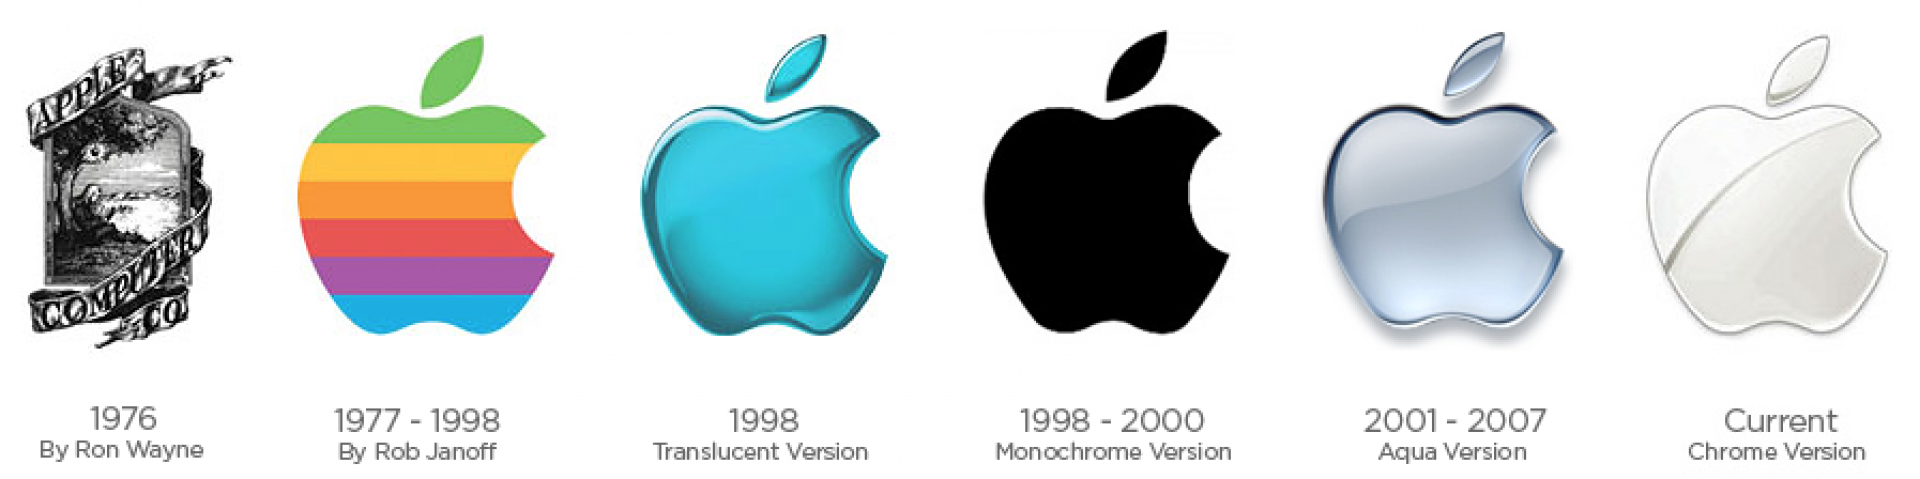 Vývoj loga Apple